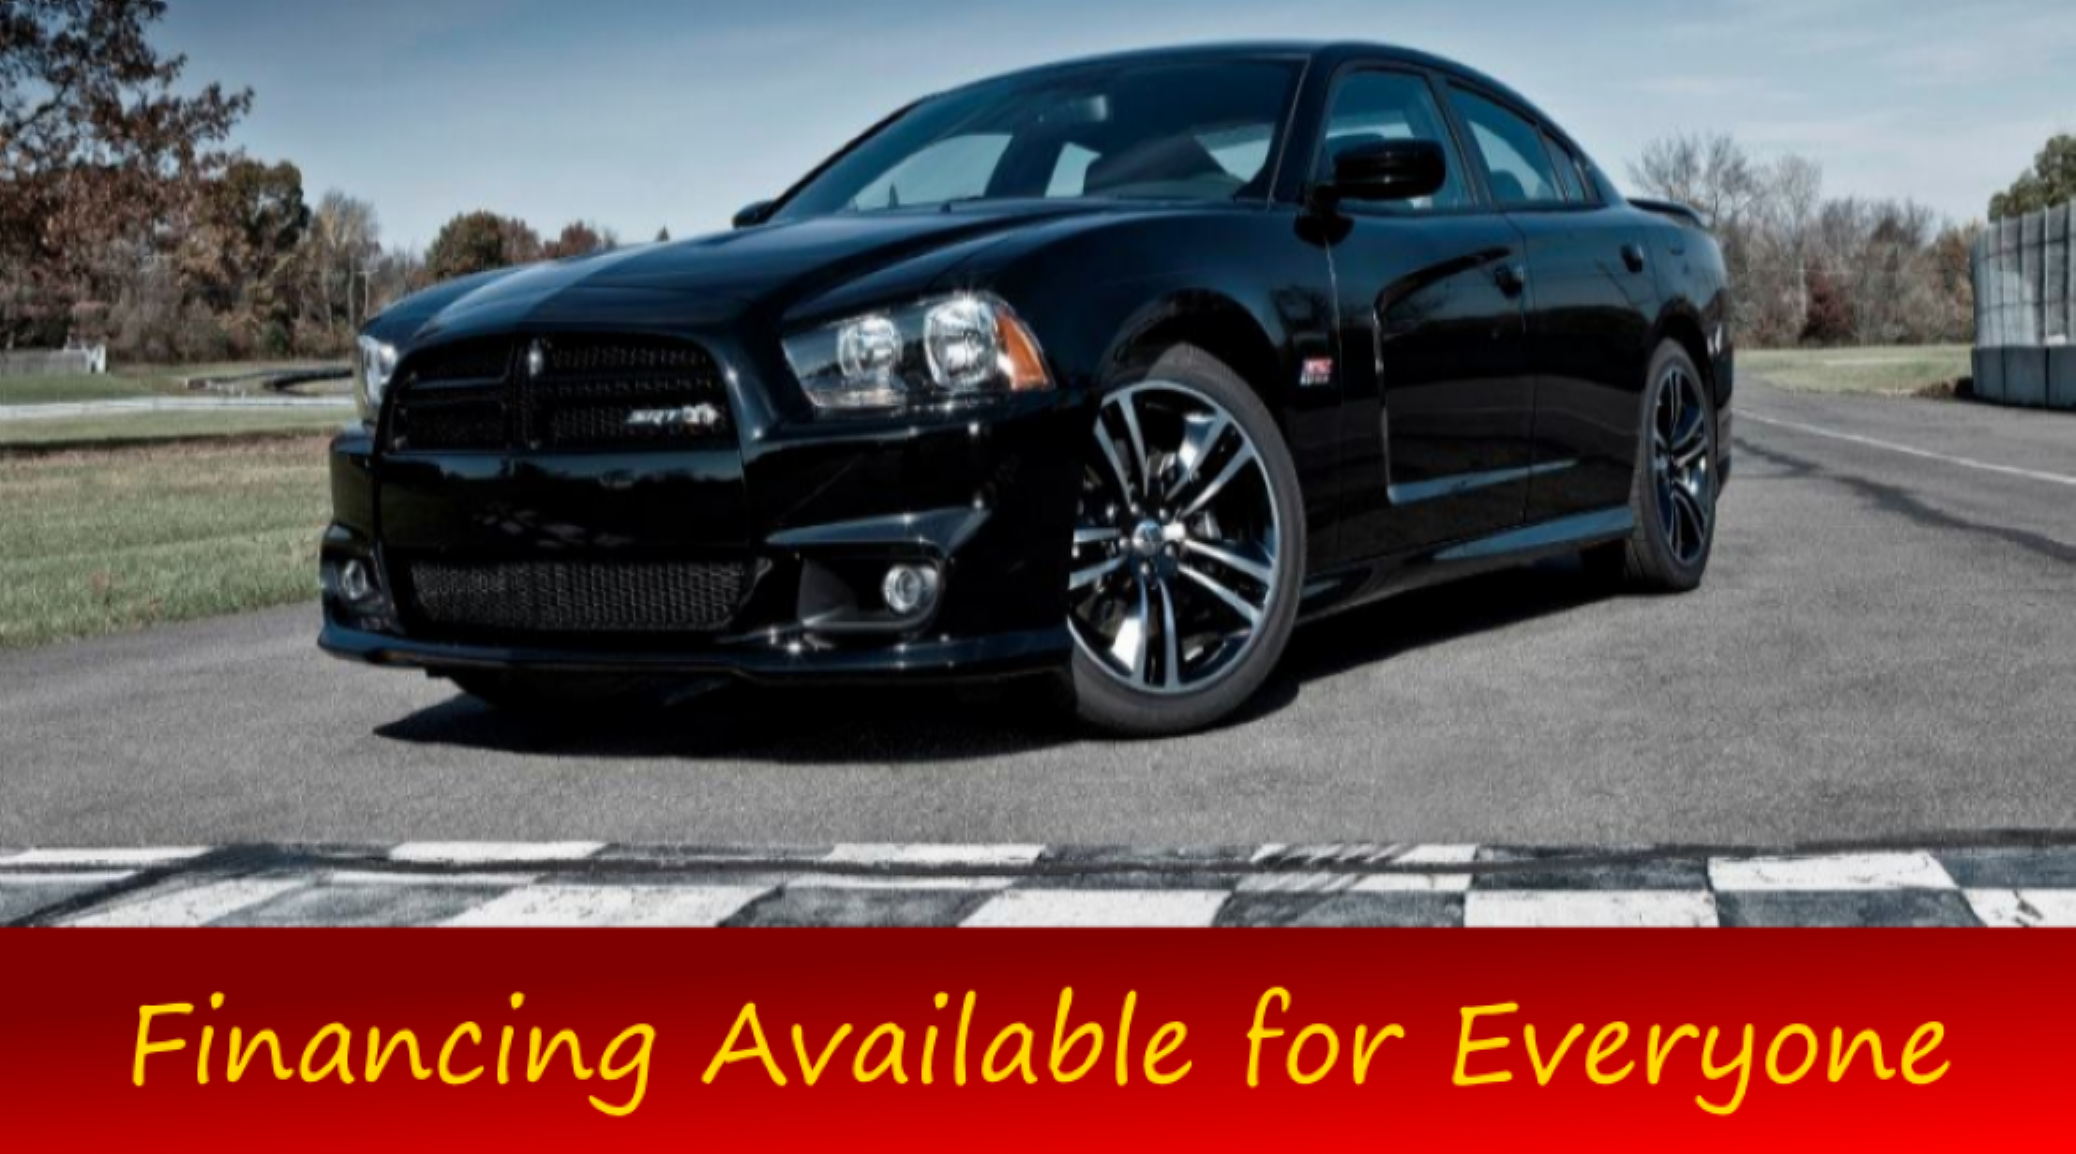 Used Car Dealer Nashville, TN | Pegrams Auto Sales, Inc